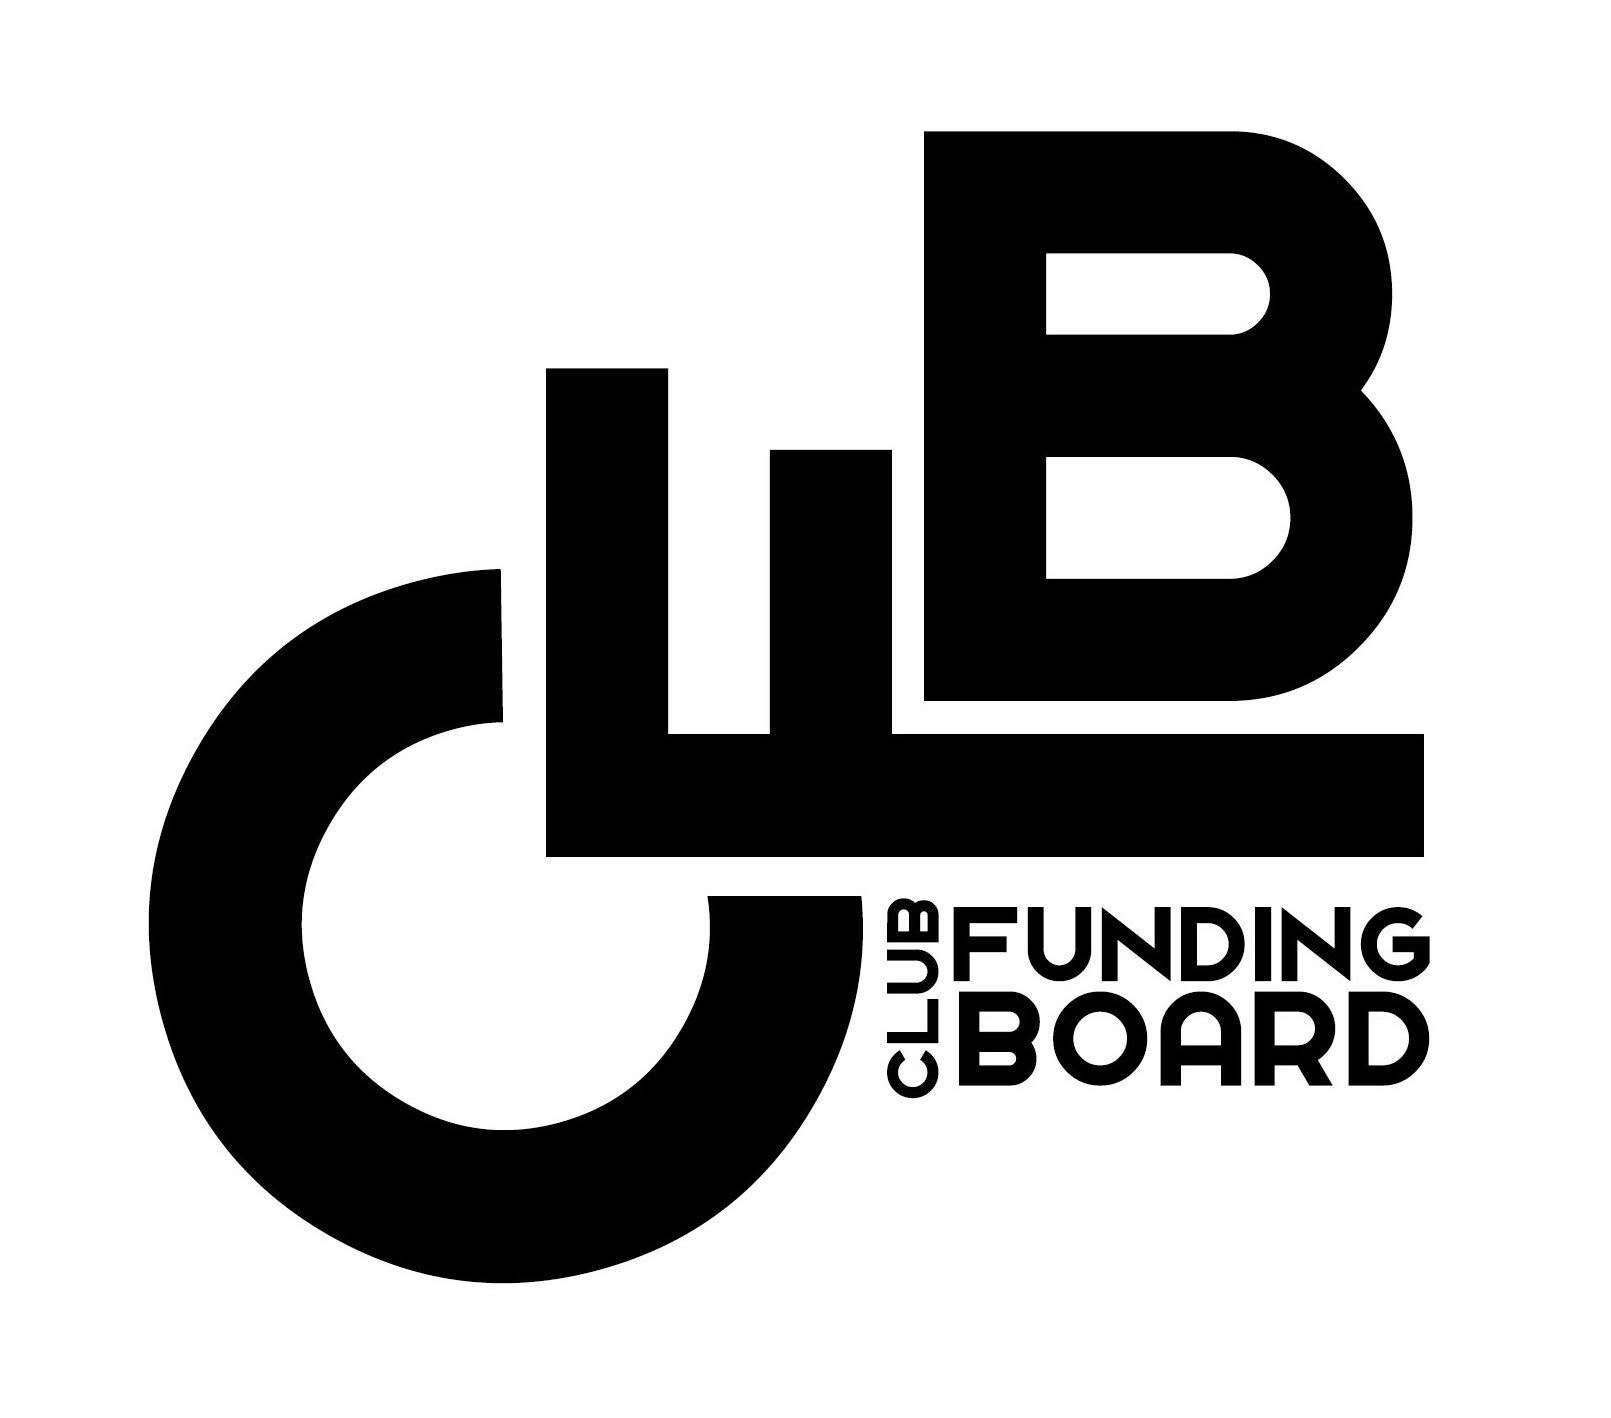 Club Funding Board